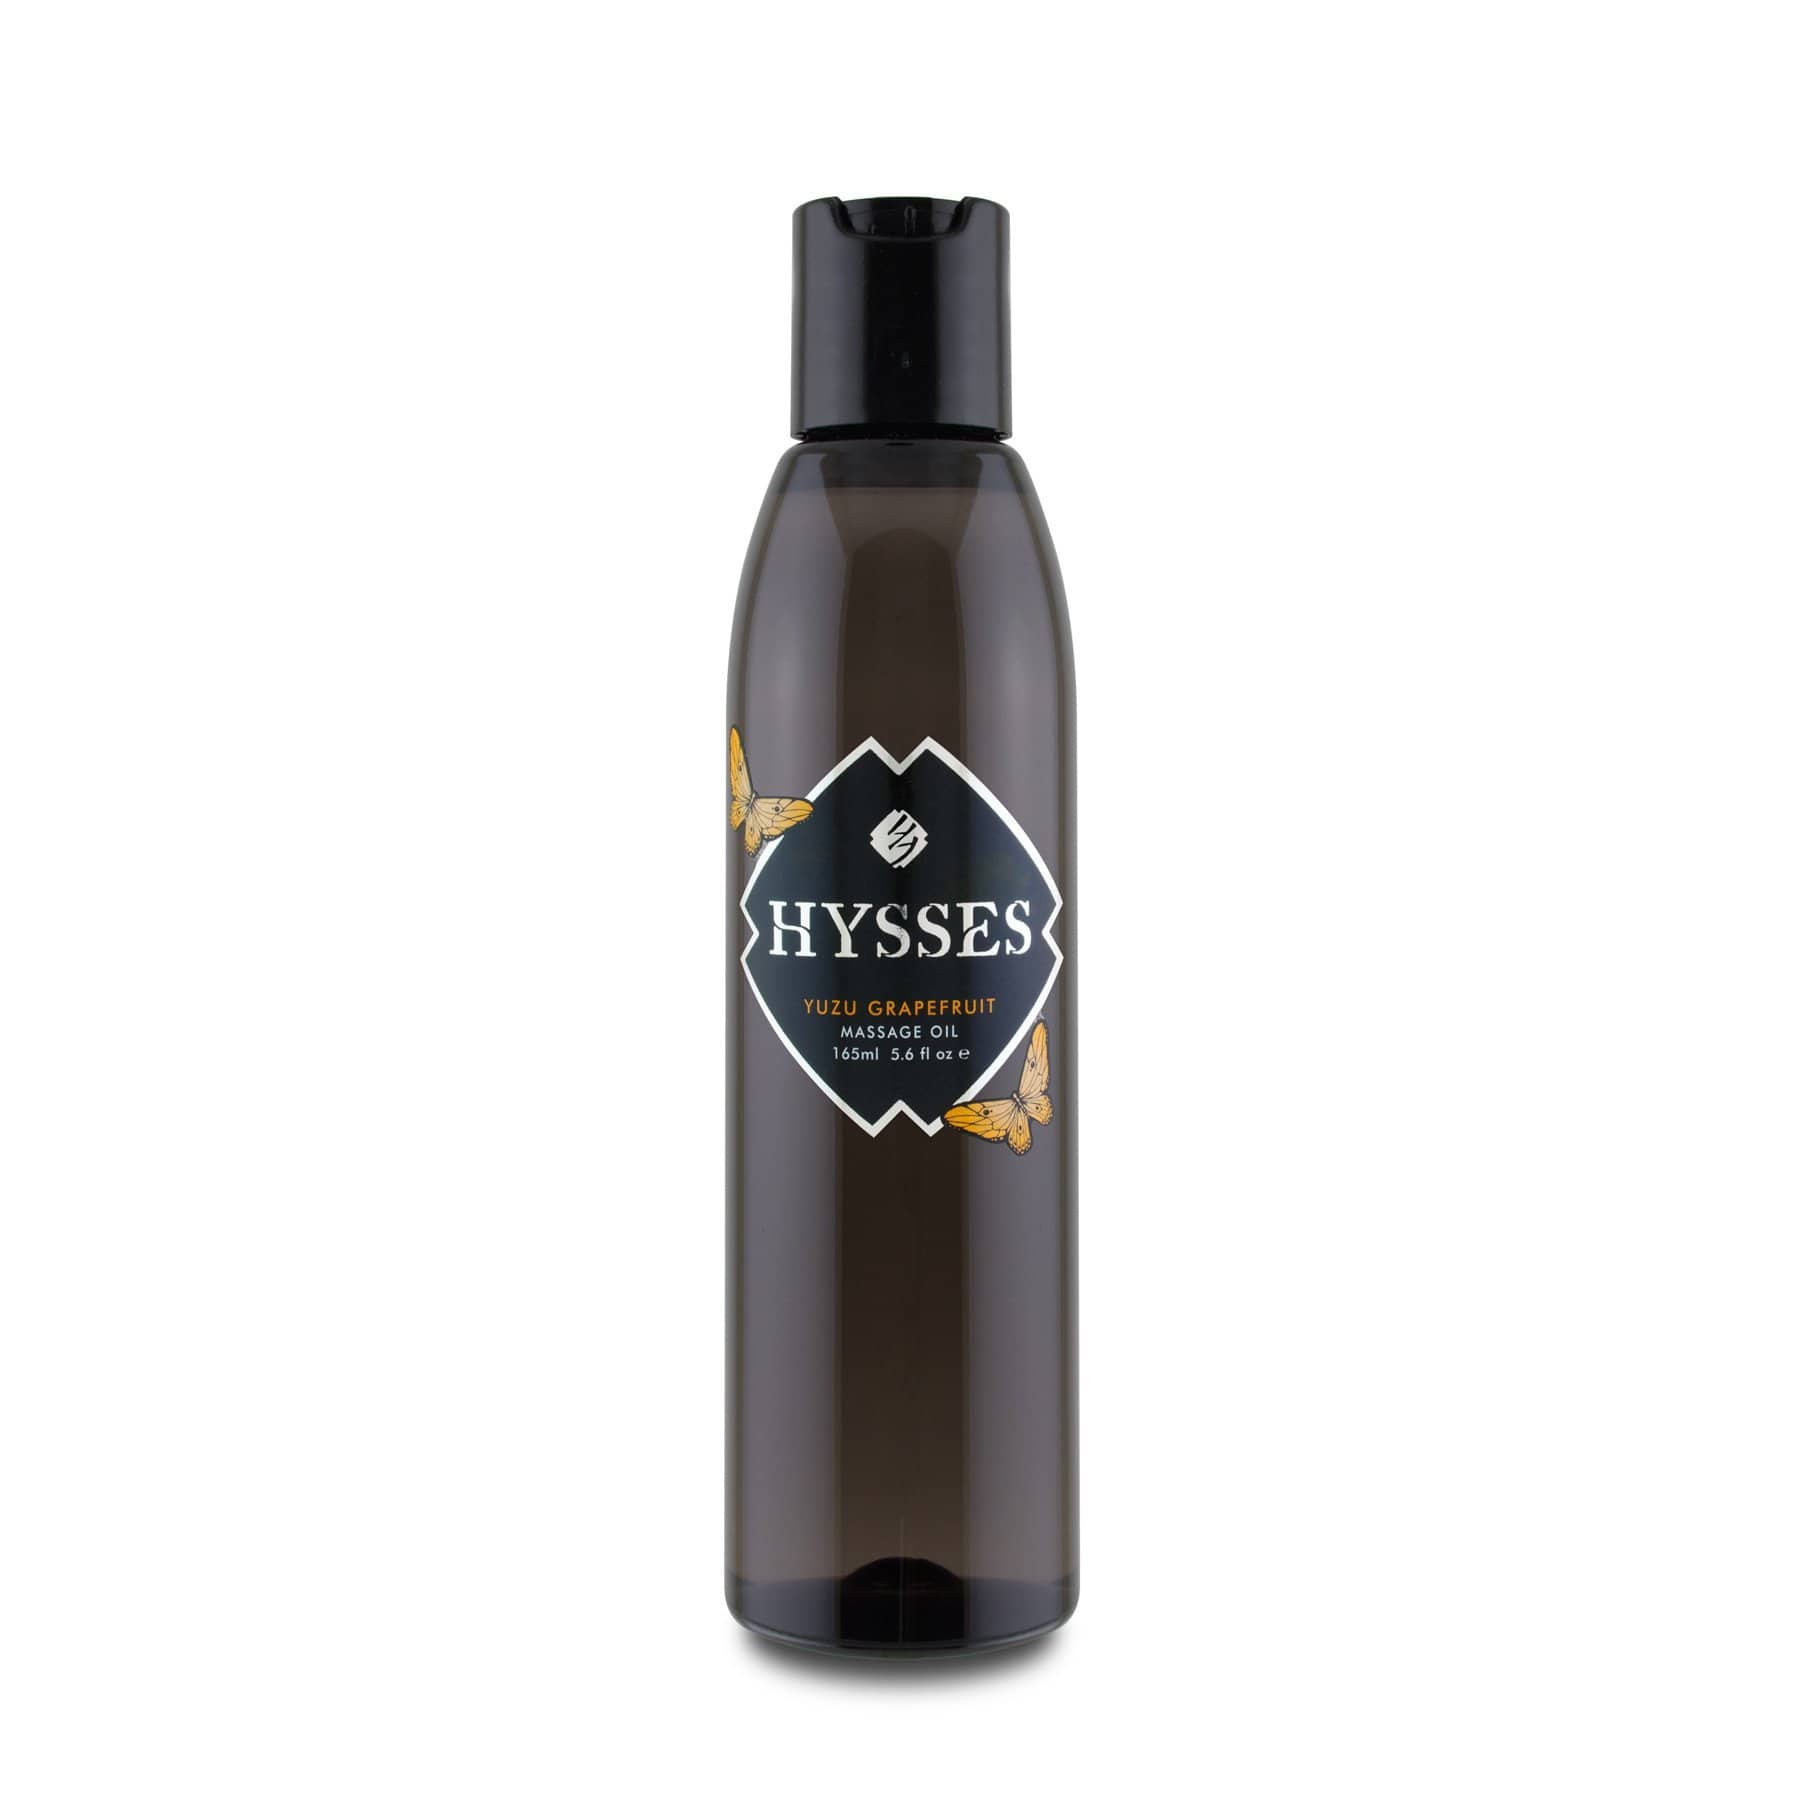 Hysses Body Care Massage Oil Yuzu Grapefruit